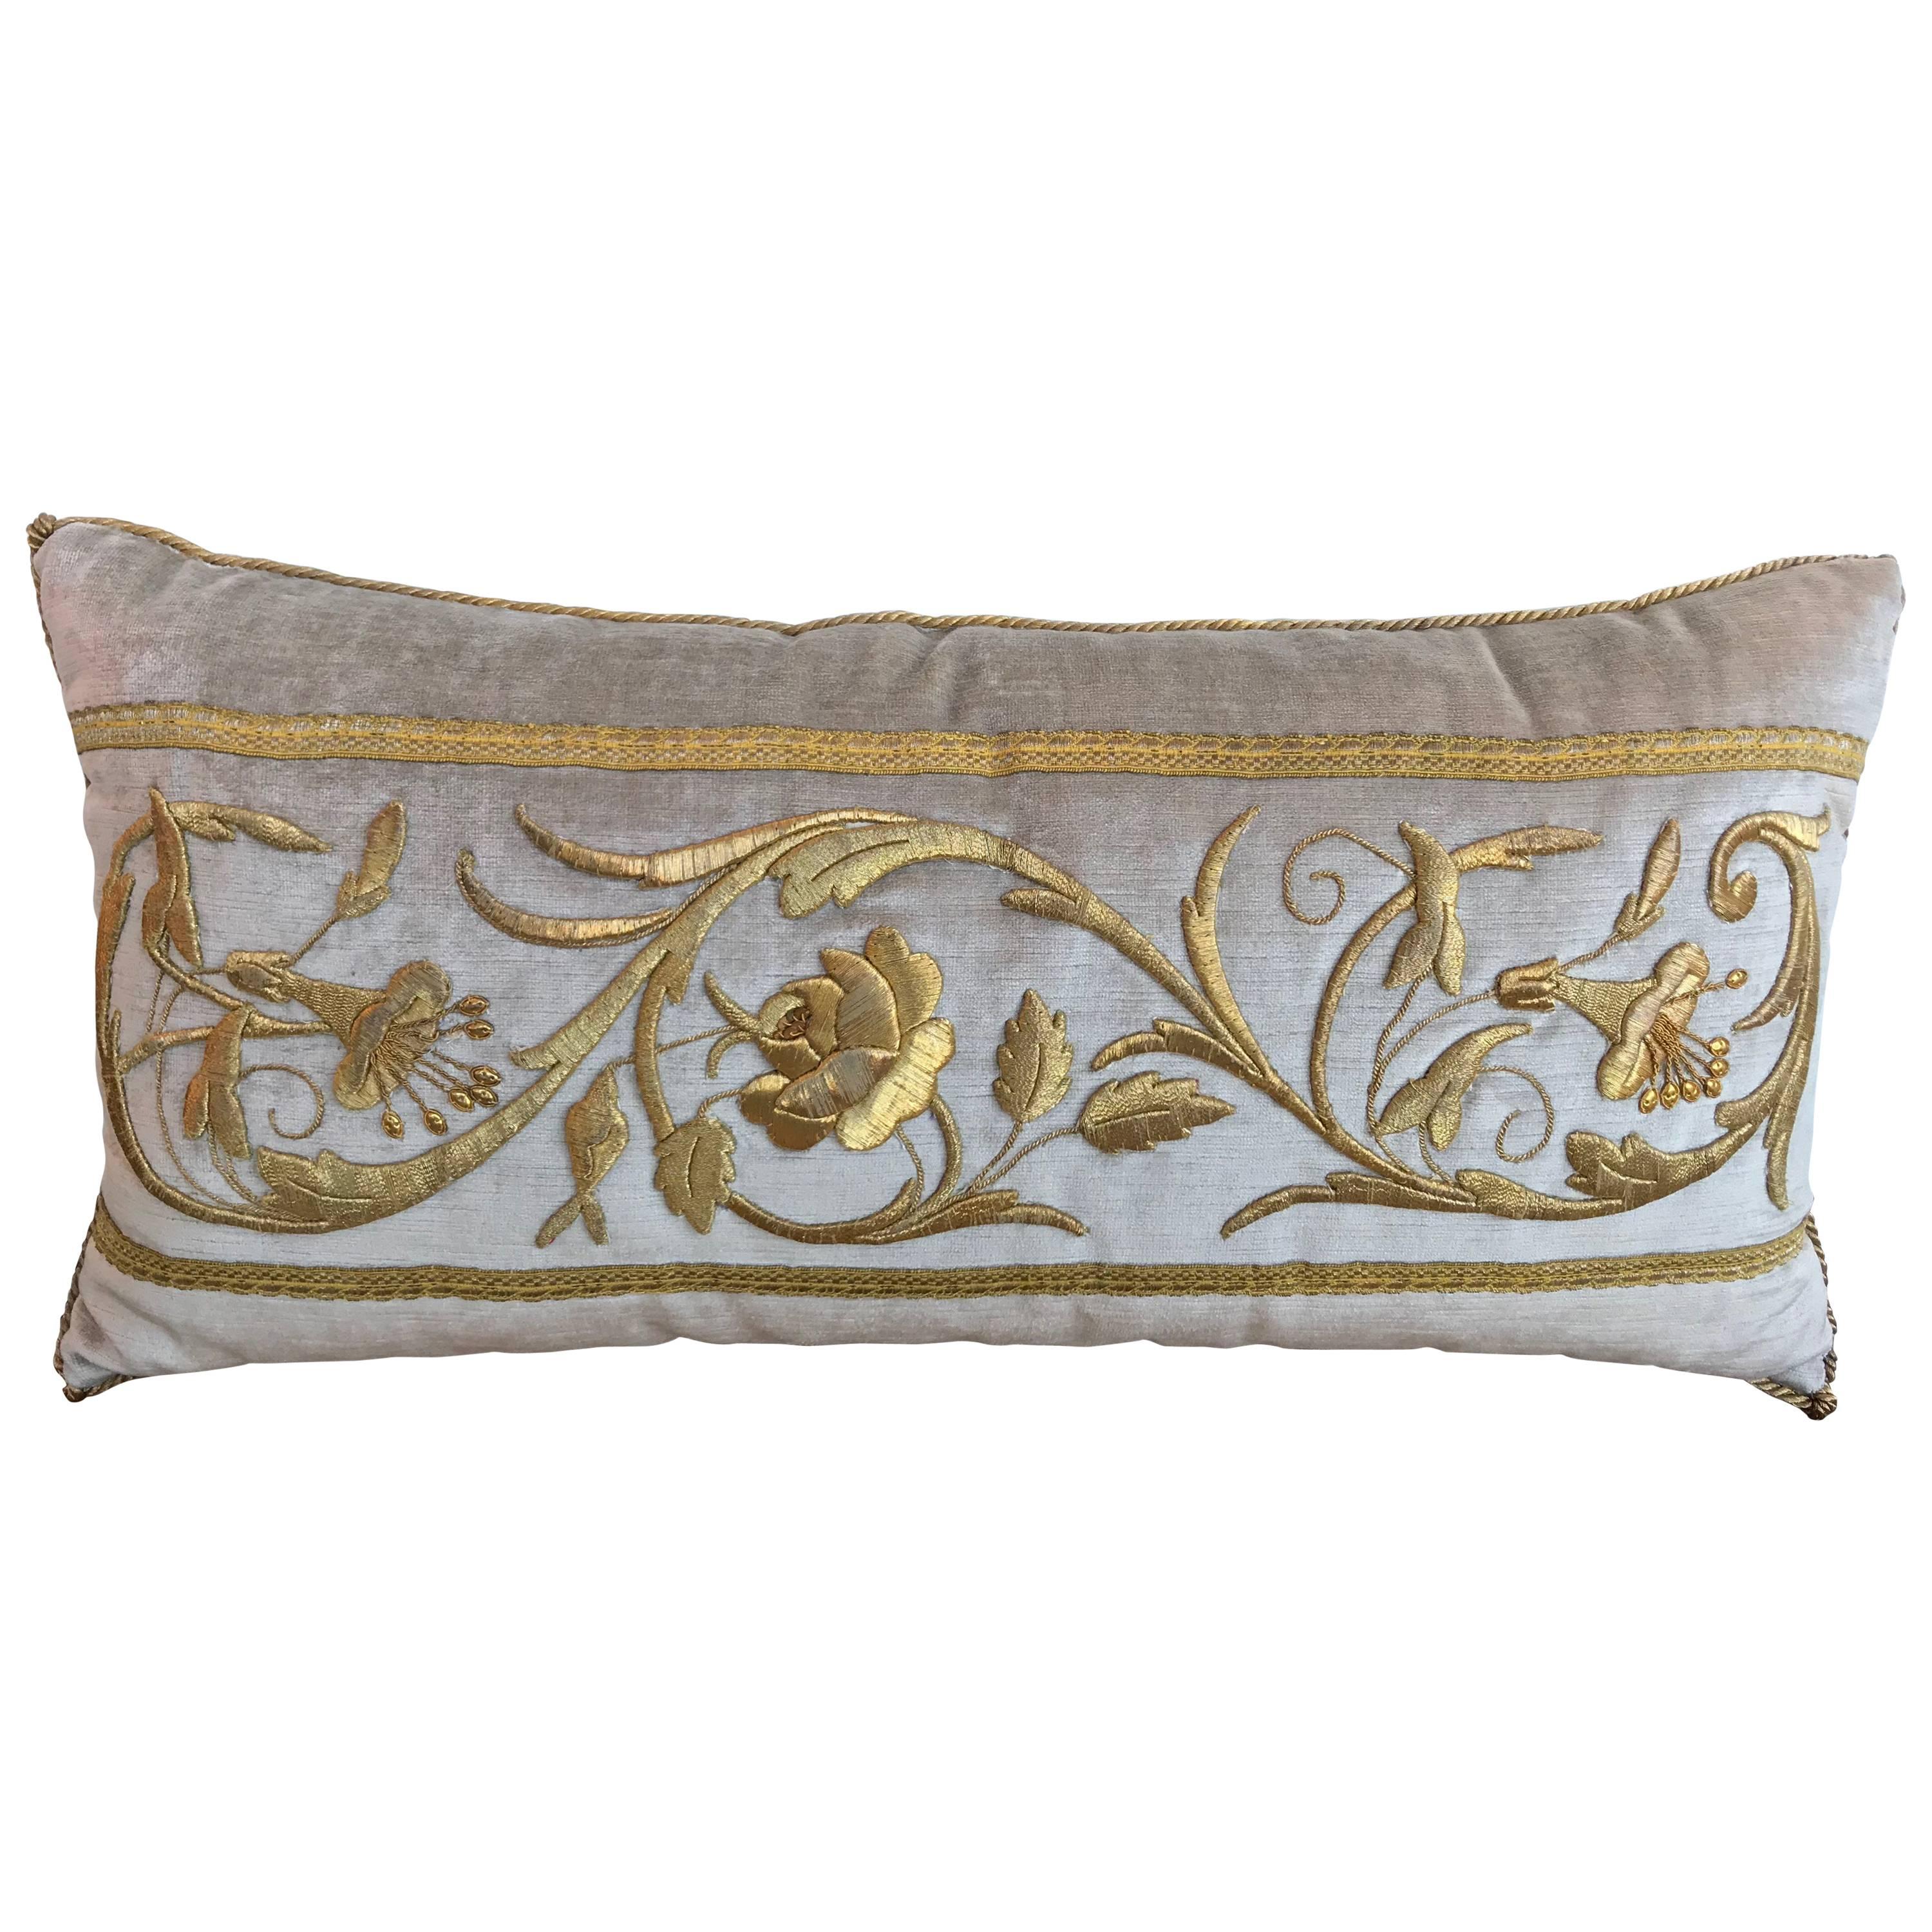 Antique European Gold Metallic Embroidery Pillow For Sale